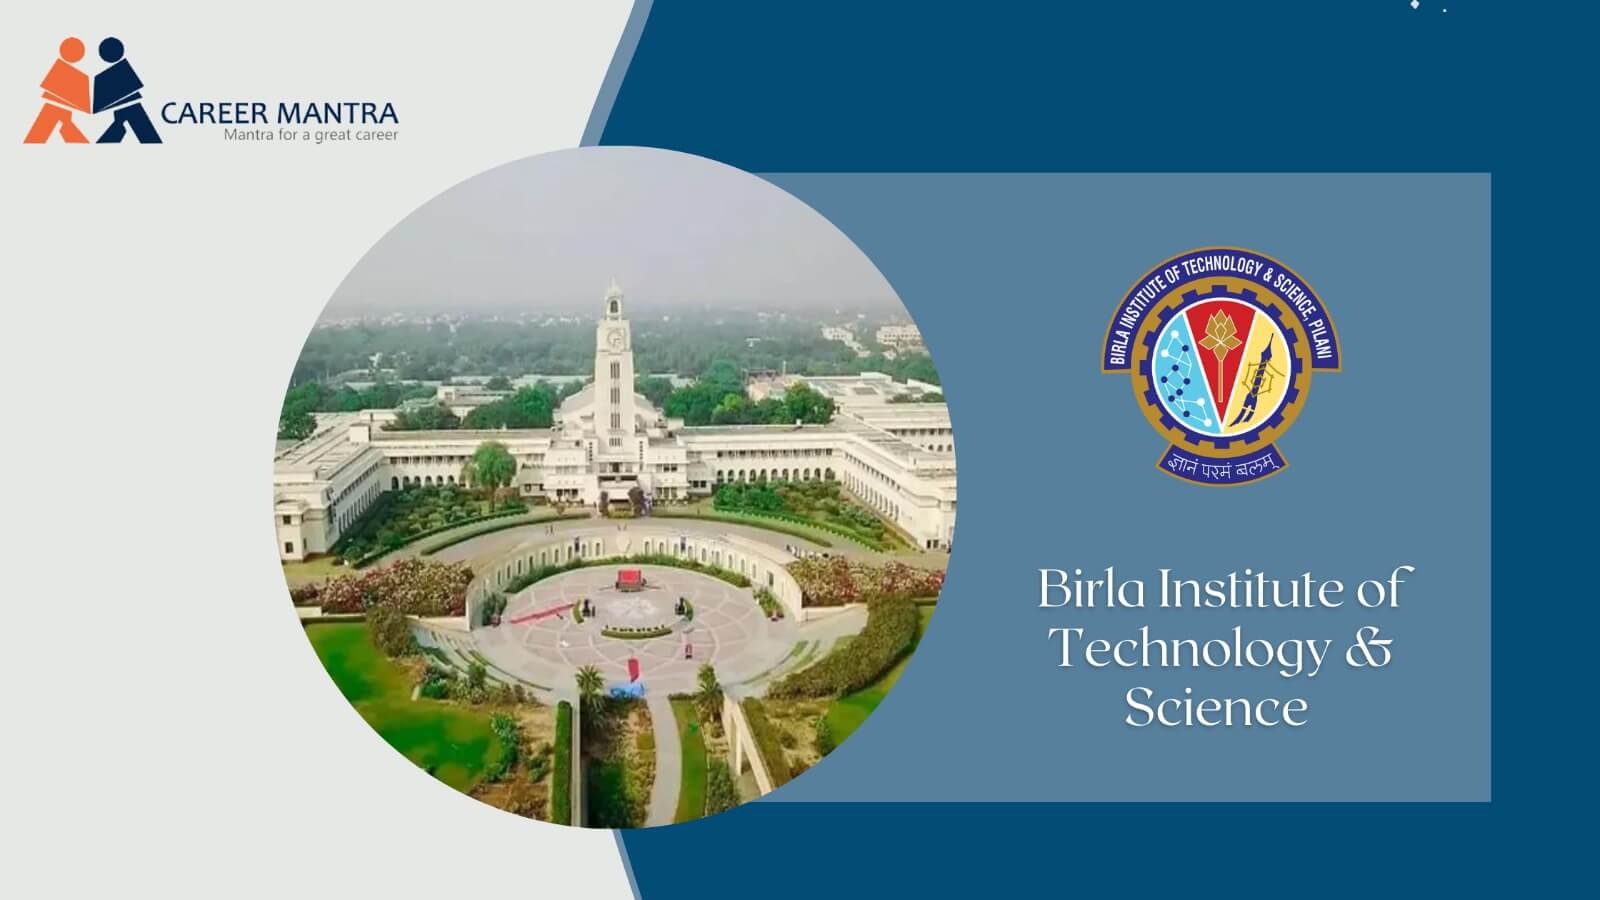 https://www.careermantra.net/blog/birla-institute-of-technology-science/